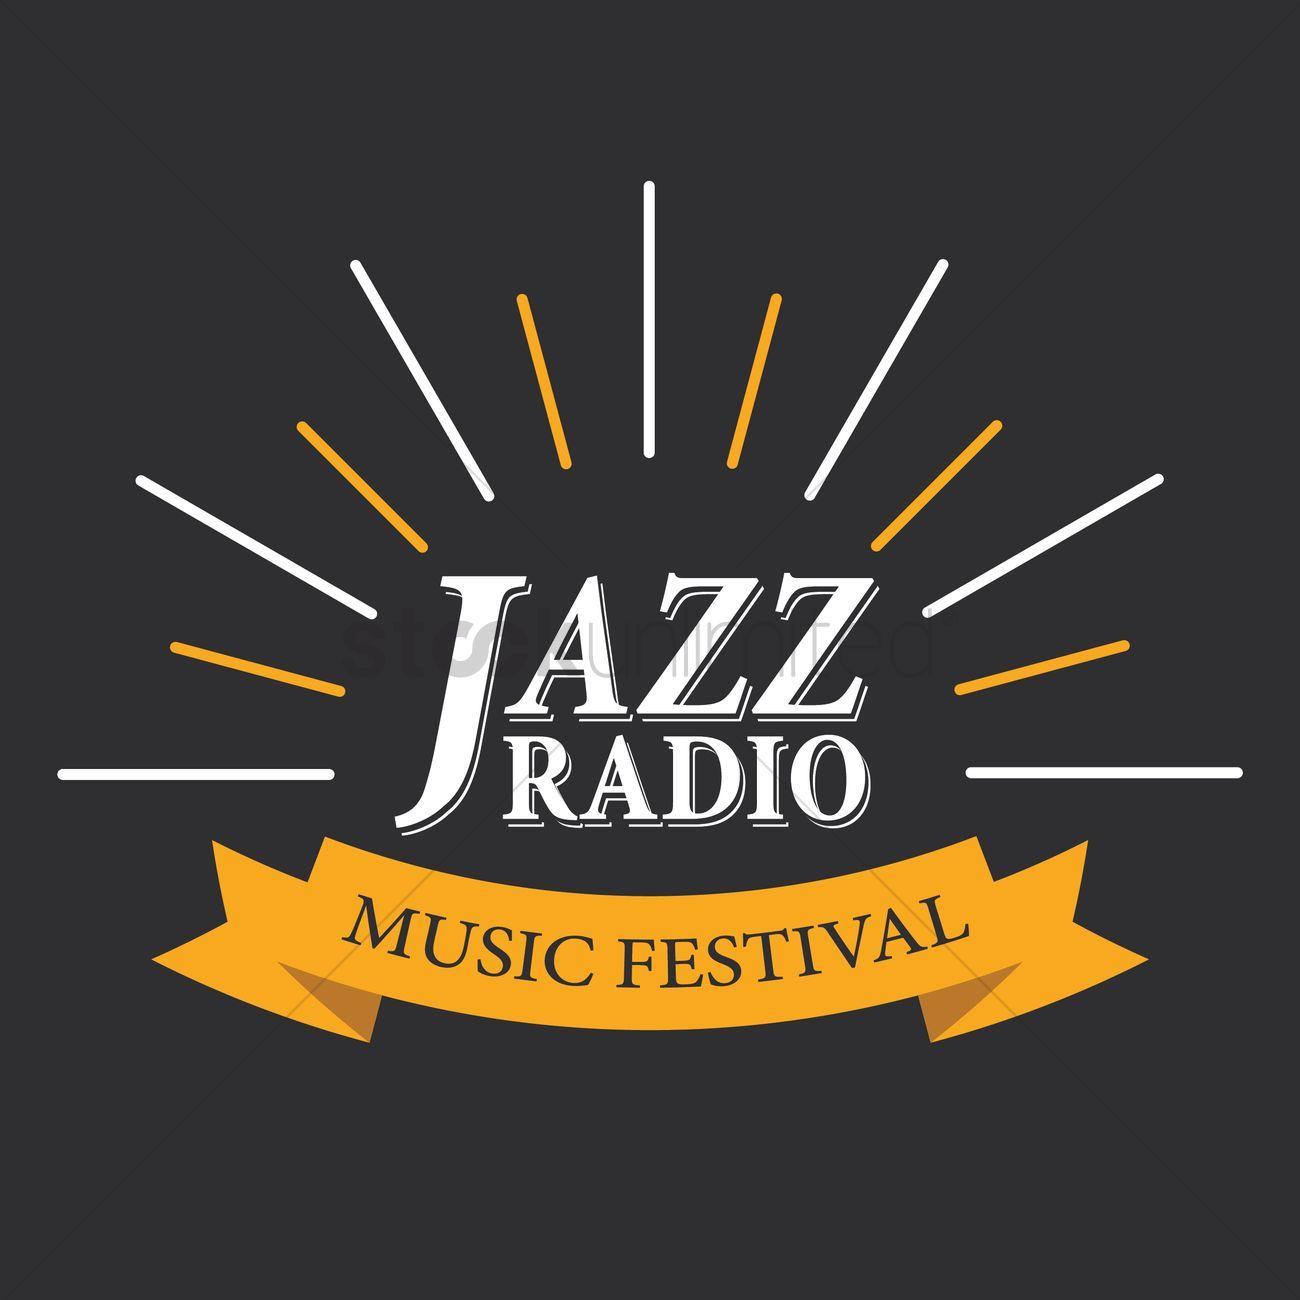 Jazz Radio Logo - Jazz radio music festival logo Vector Image - 1809523 | StockUnlimited